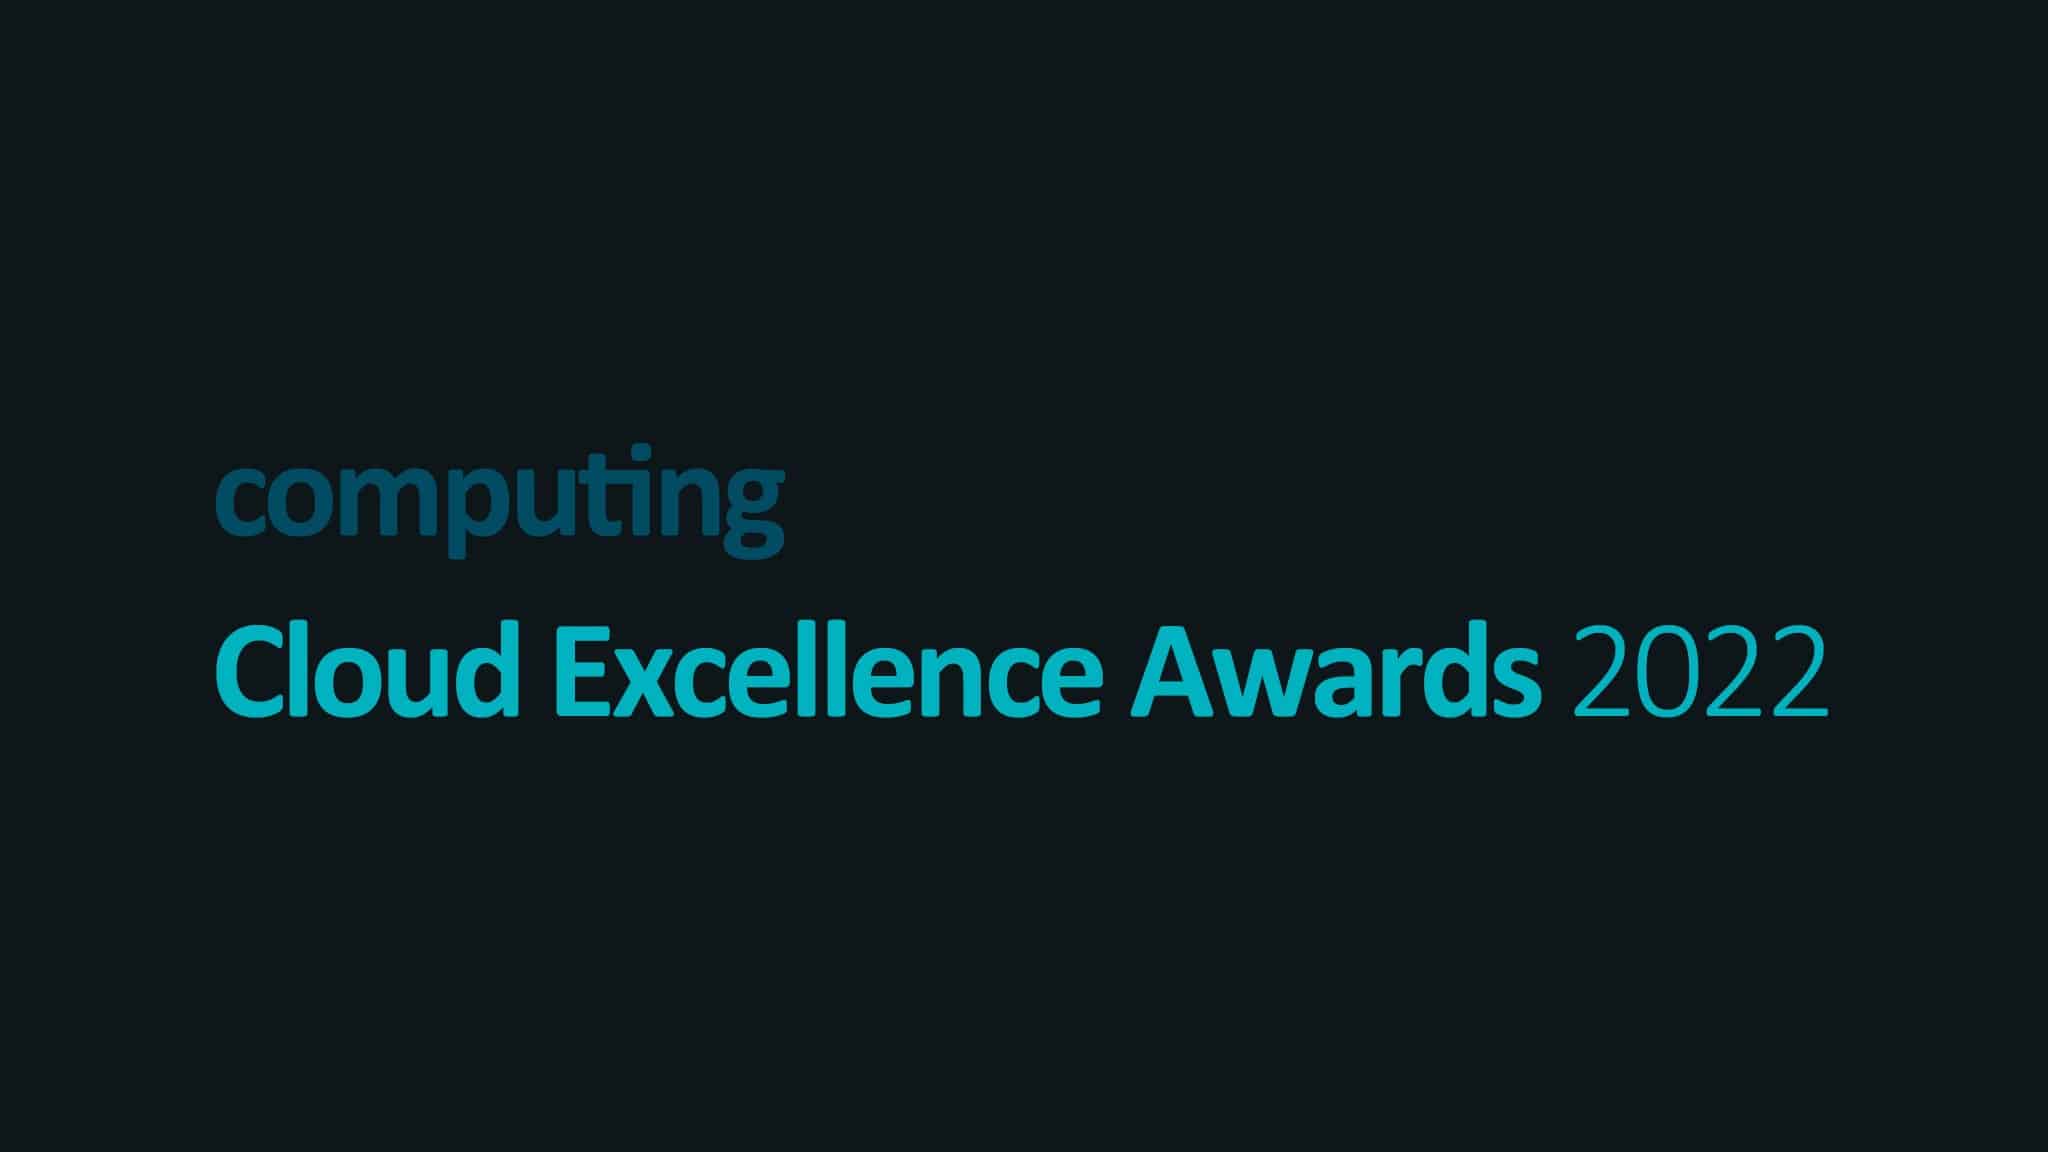 Cloud excellence ebony award logo